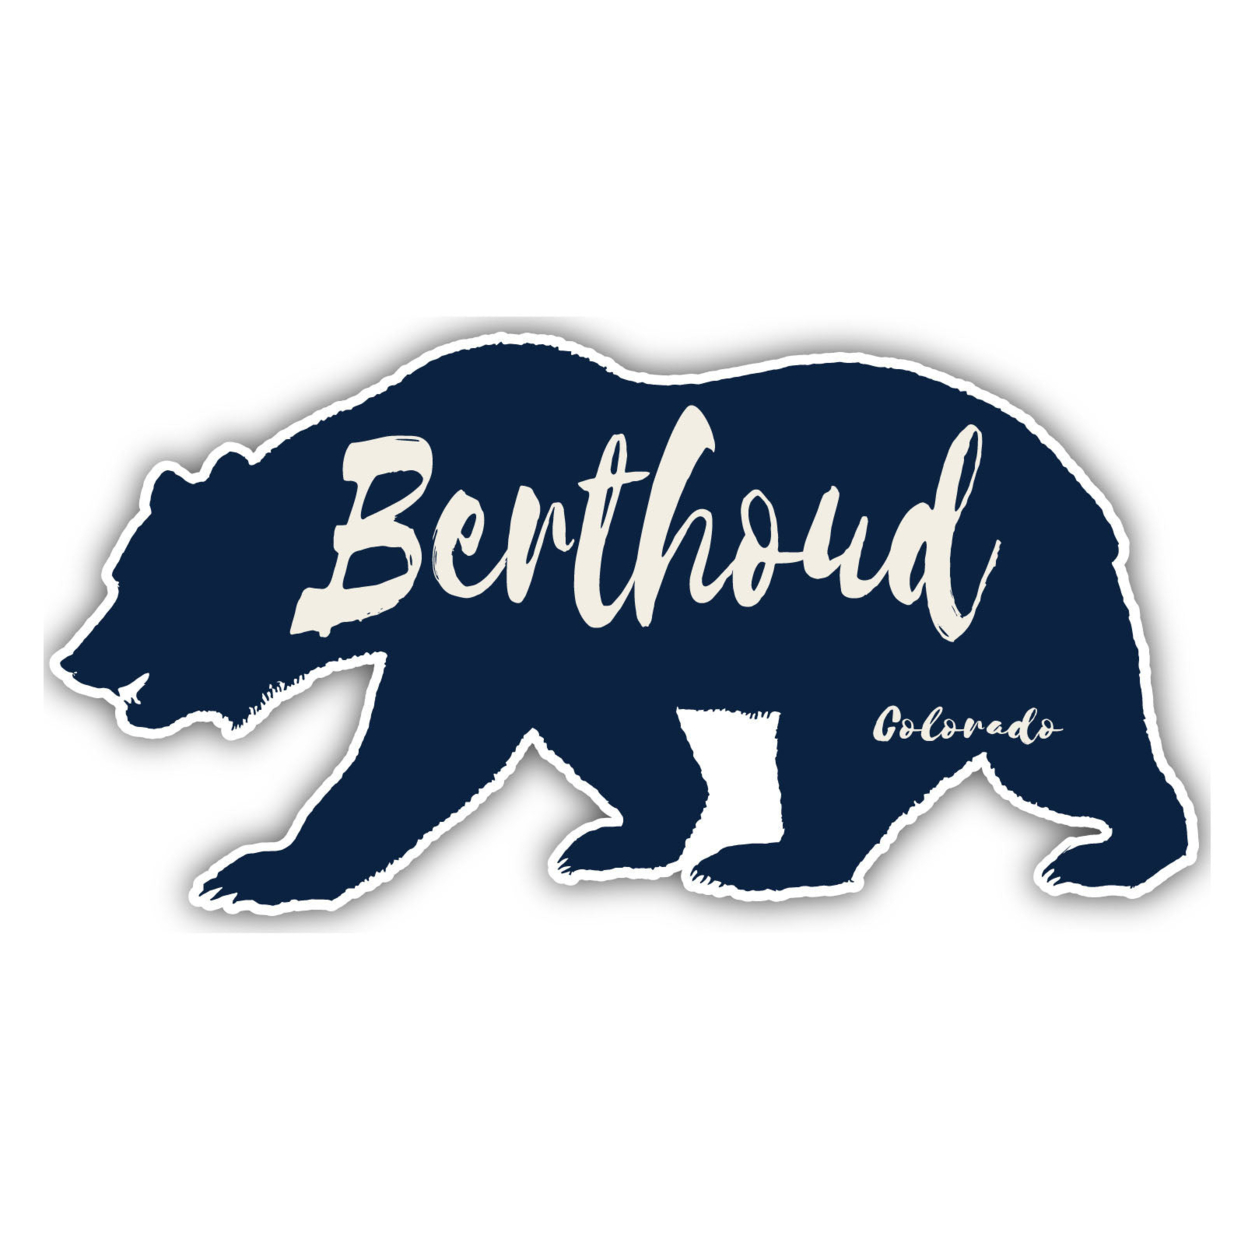 Berthoud Colorado Souvenir Decorative Stickers (Choose Theme And Size) - Single Unit, 10-Inch, Adventures Awaits